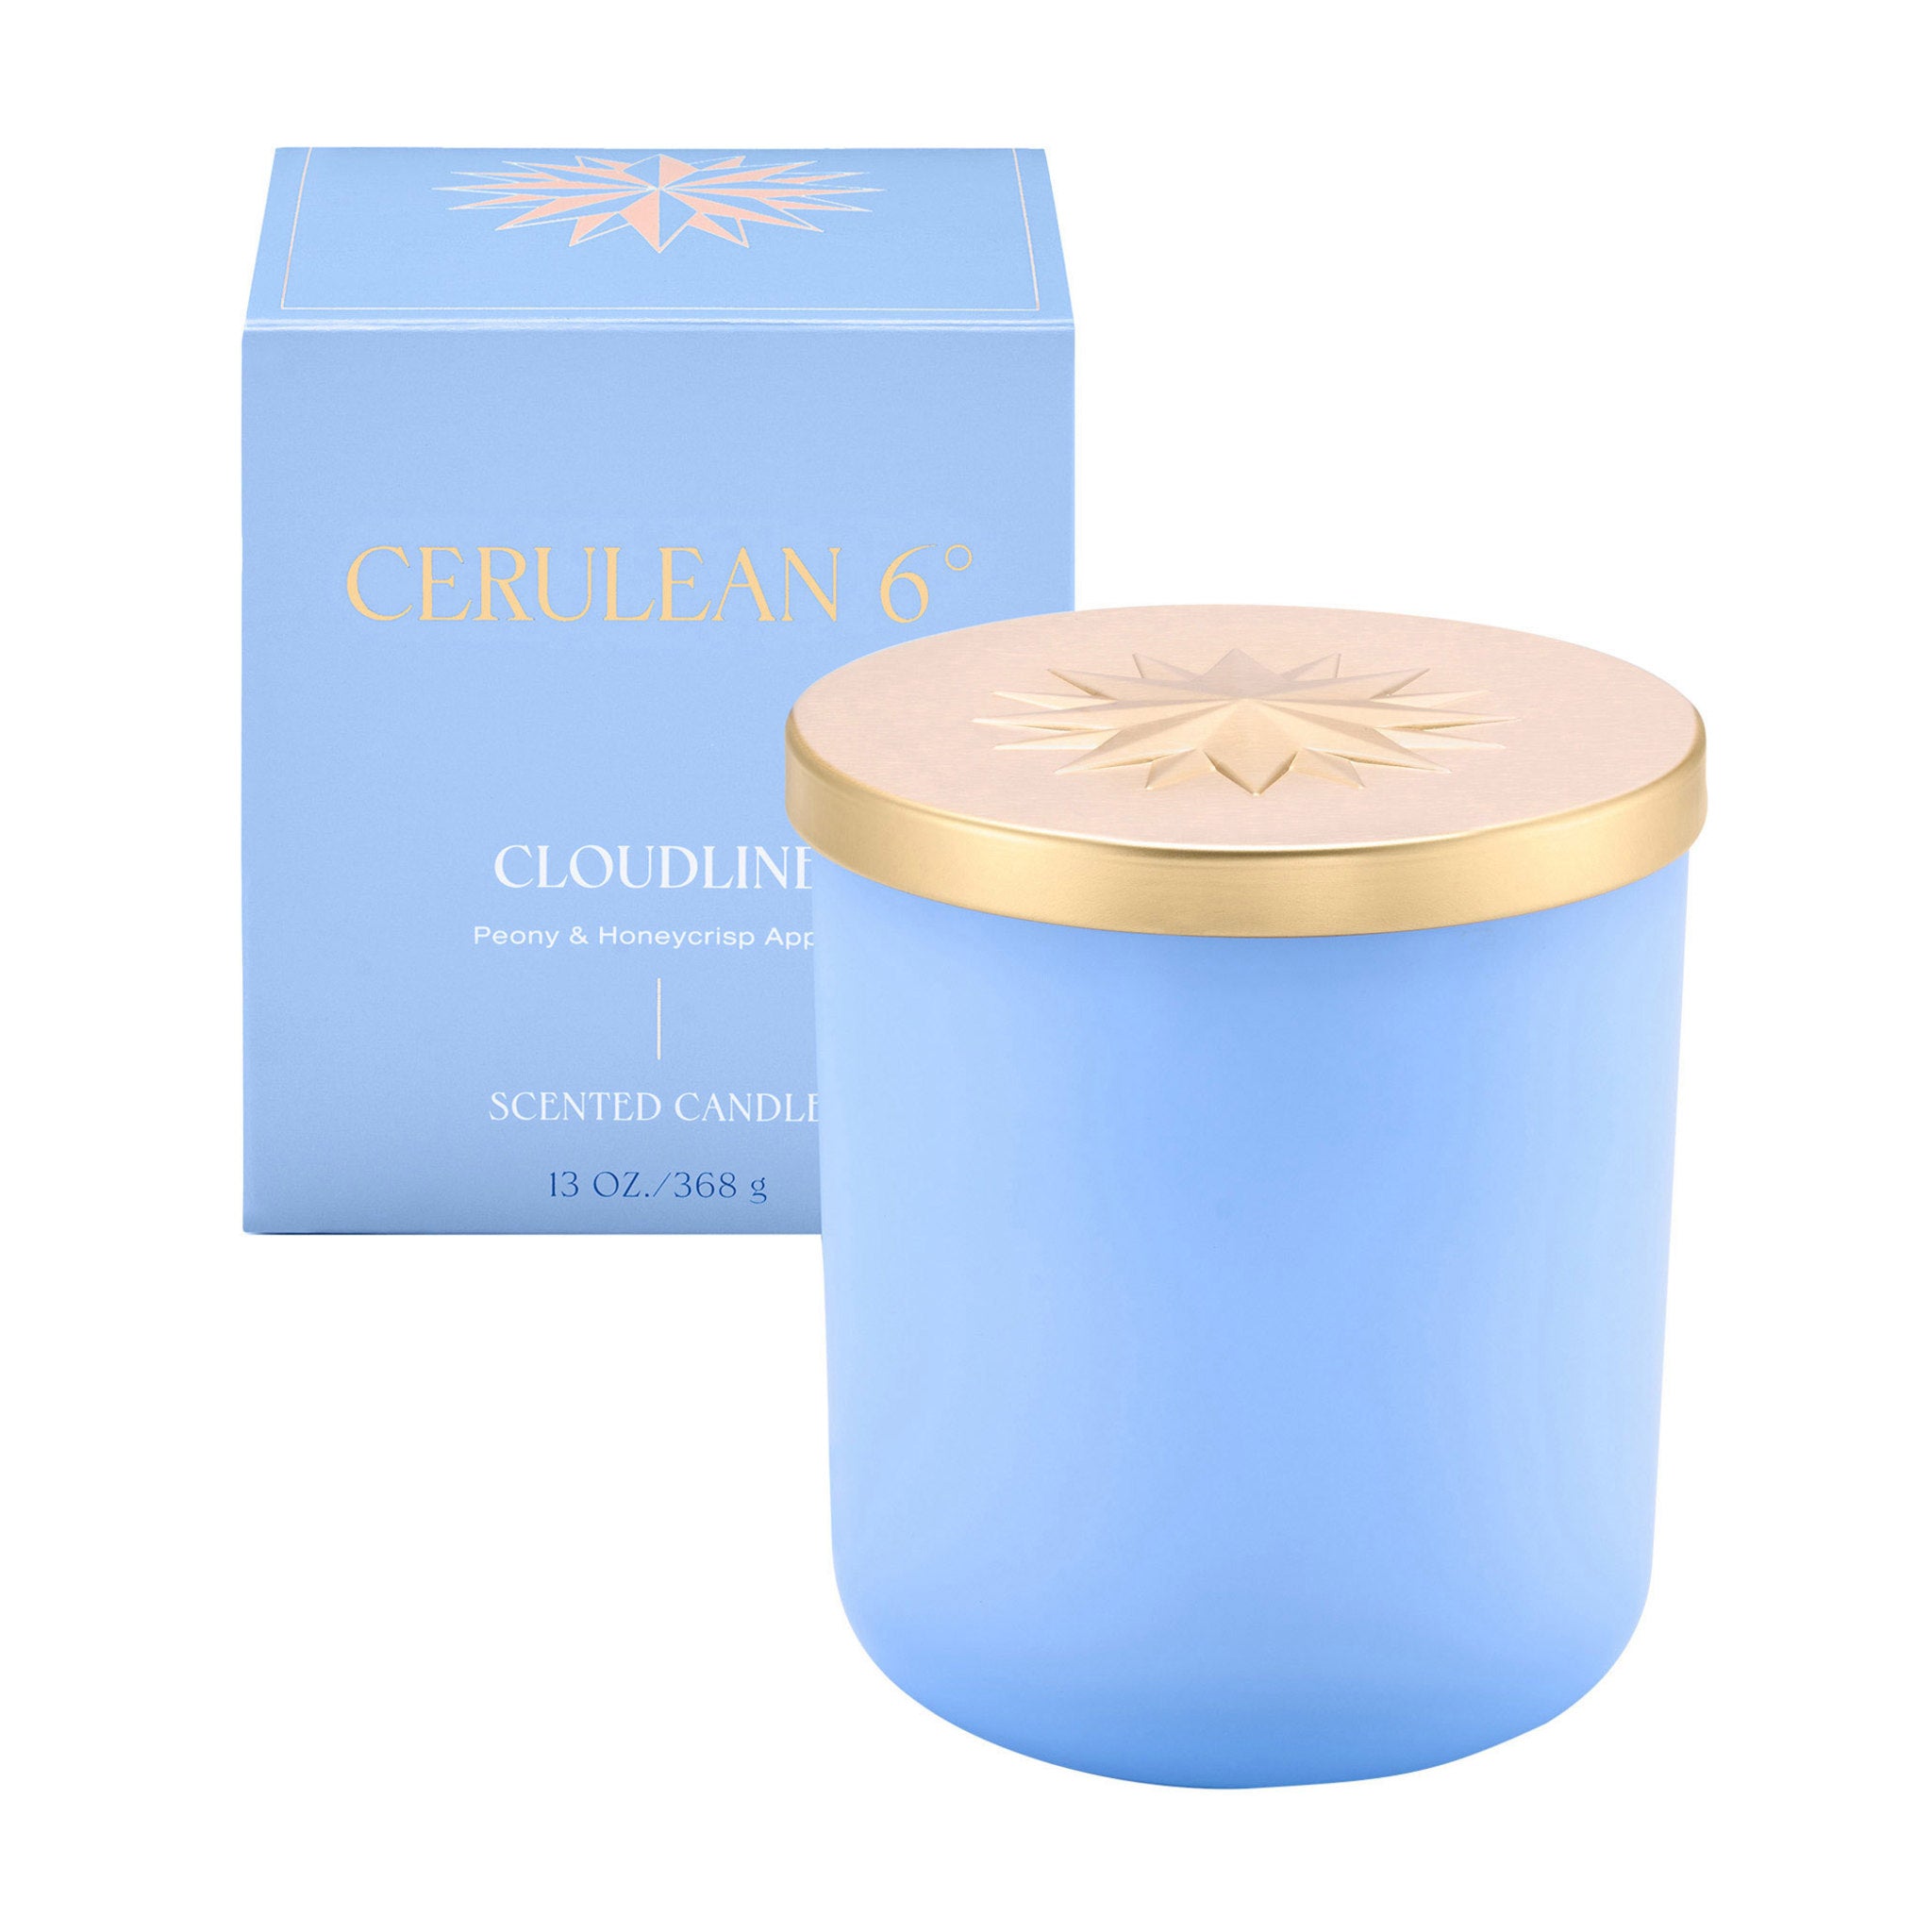 Cerulean 6 Cloudline Luxury Candle Size variant: 13 oz main image.